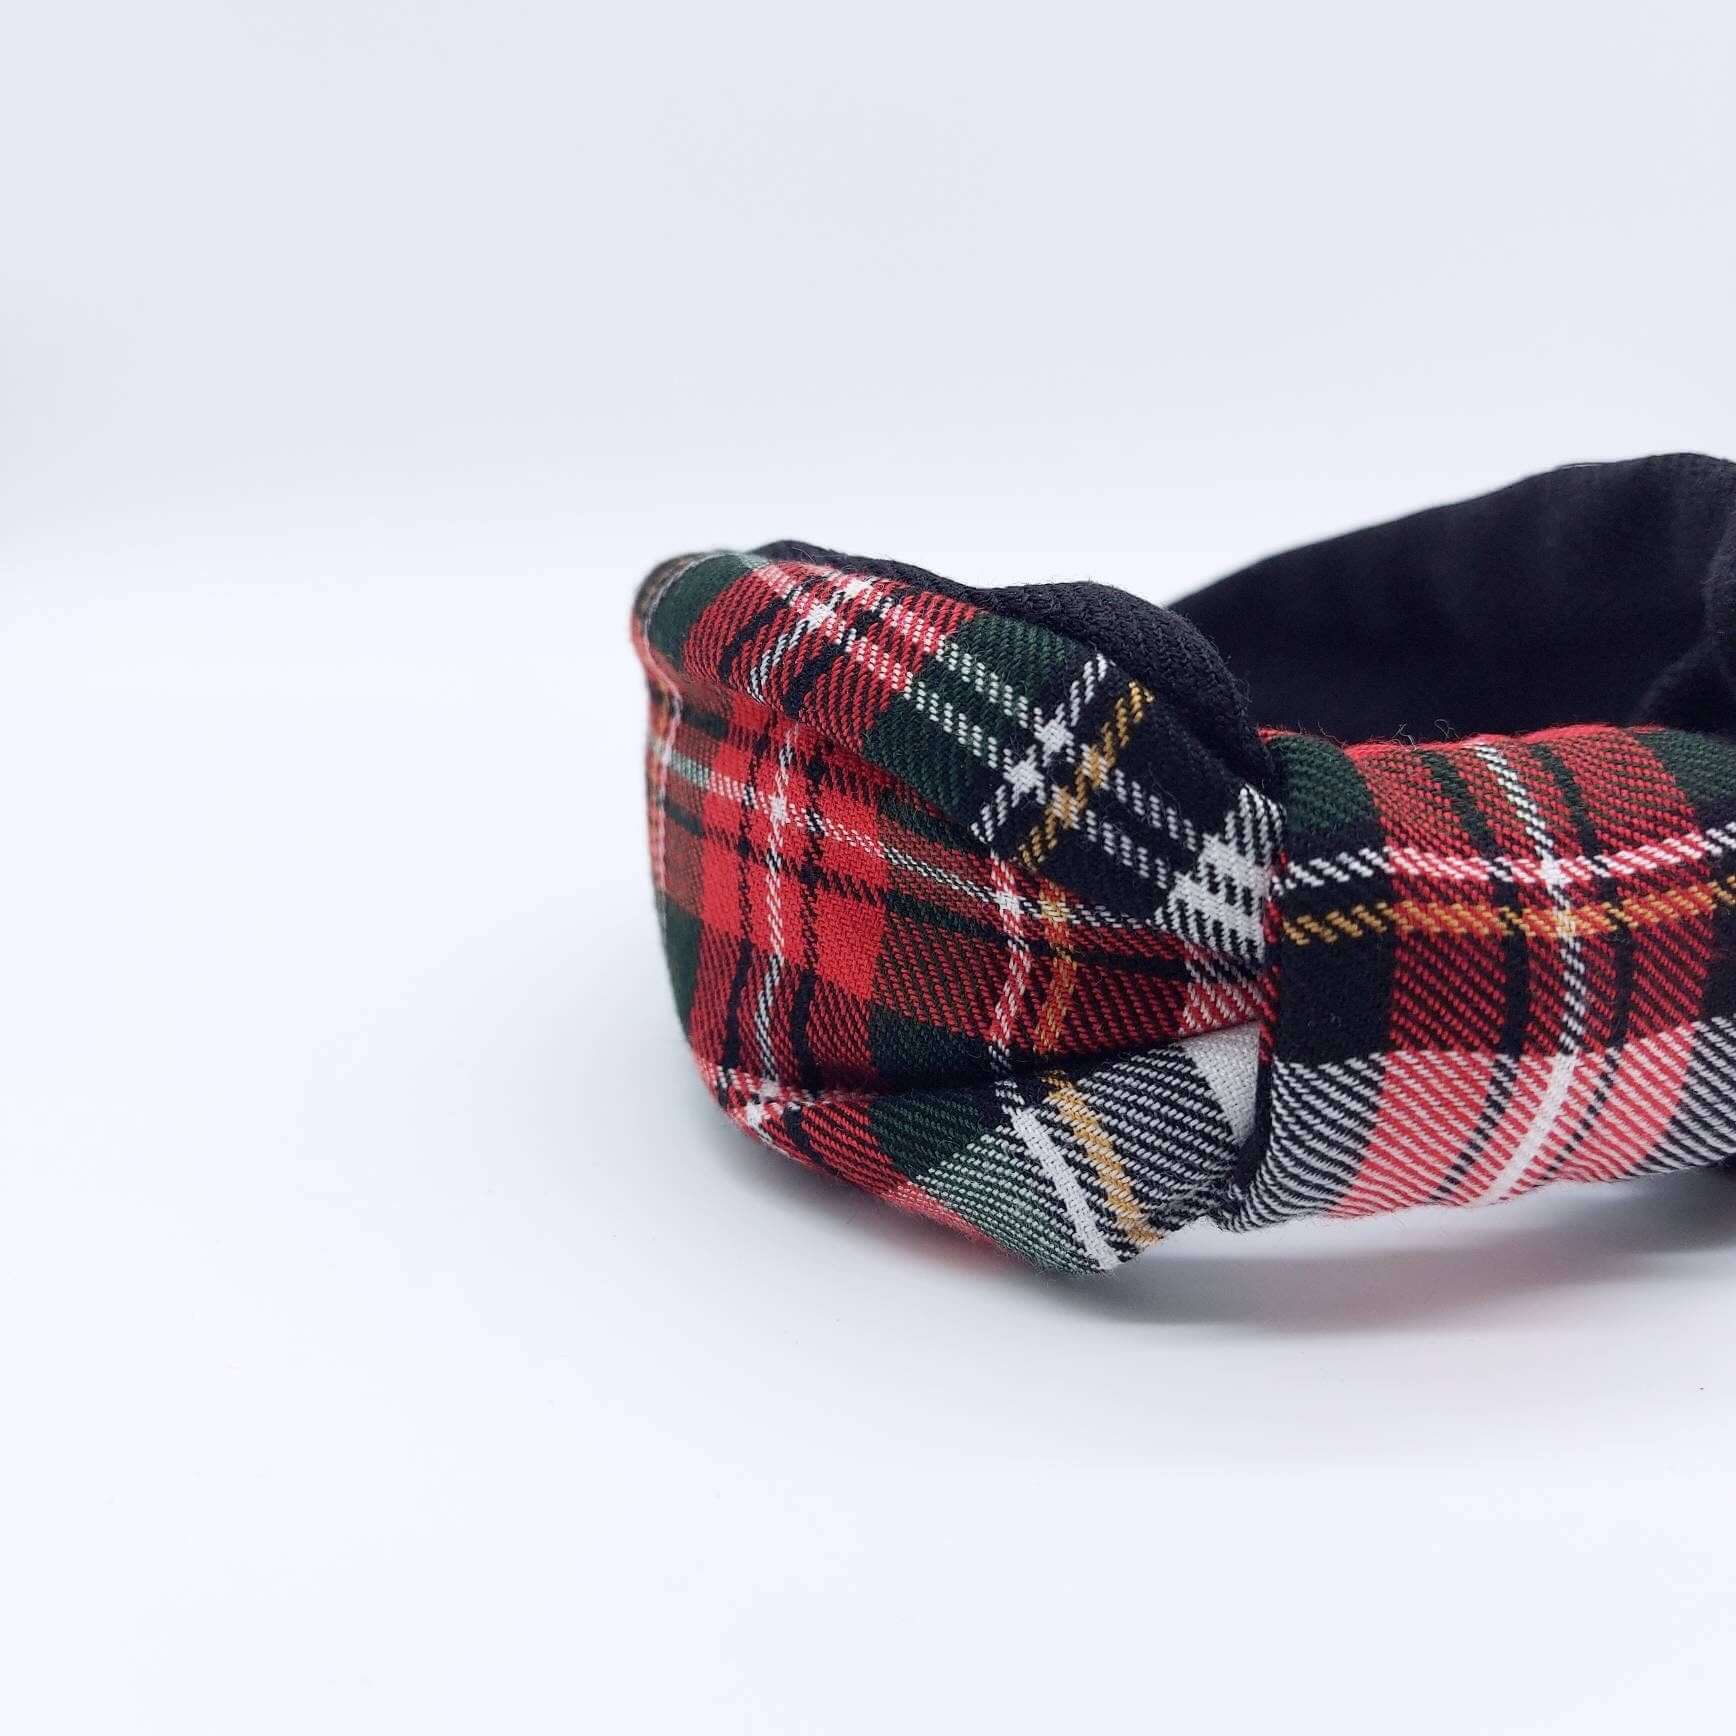 A bow-style, black and red tartan plaid fabric headband with plain black lining underneath